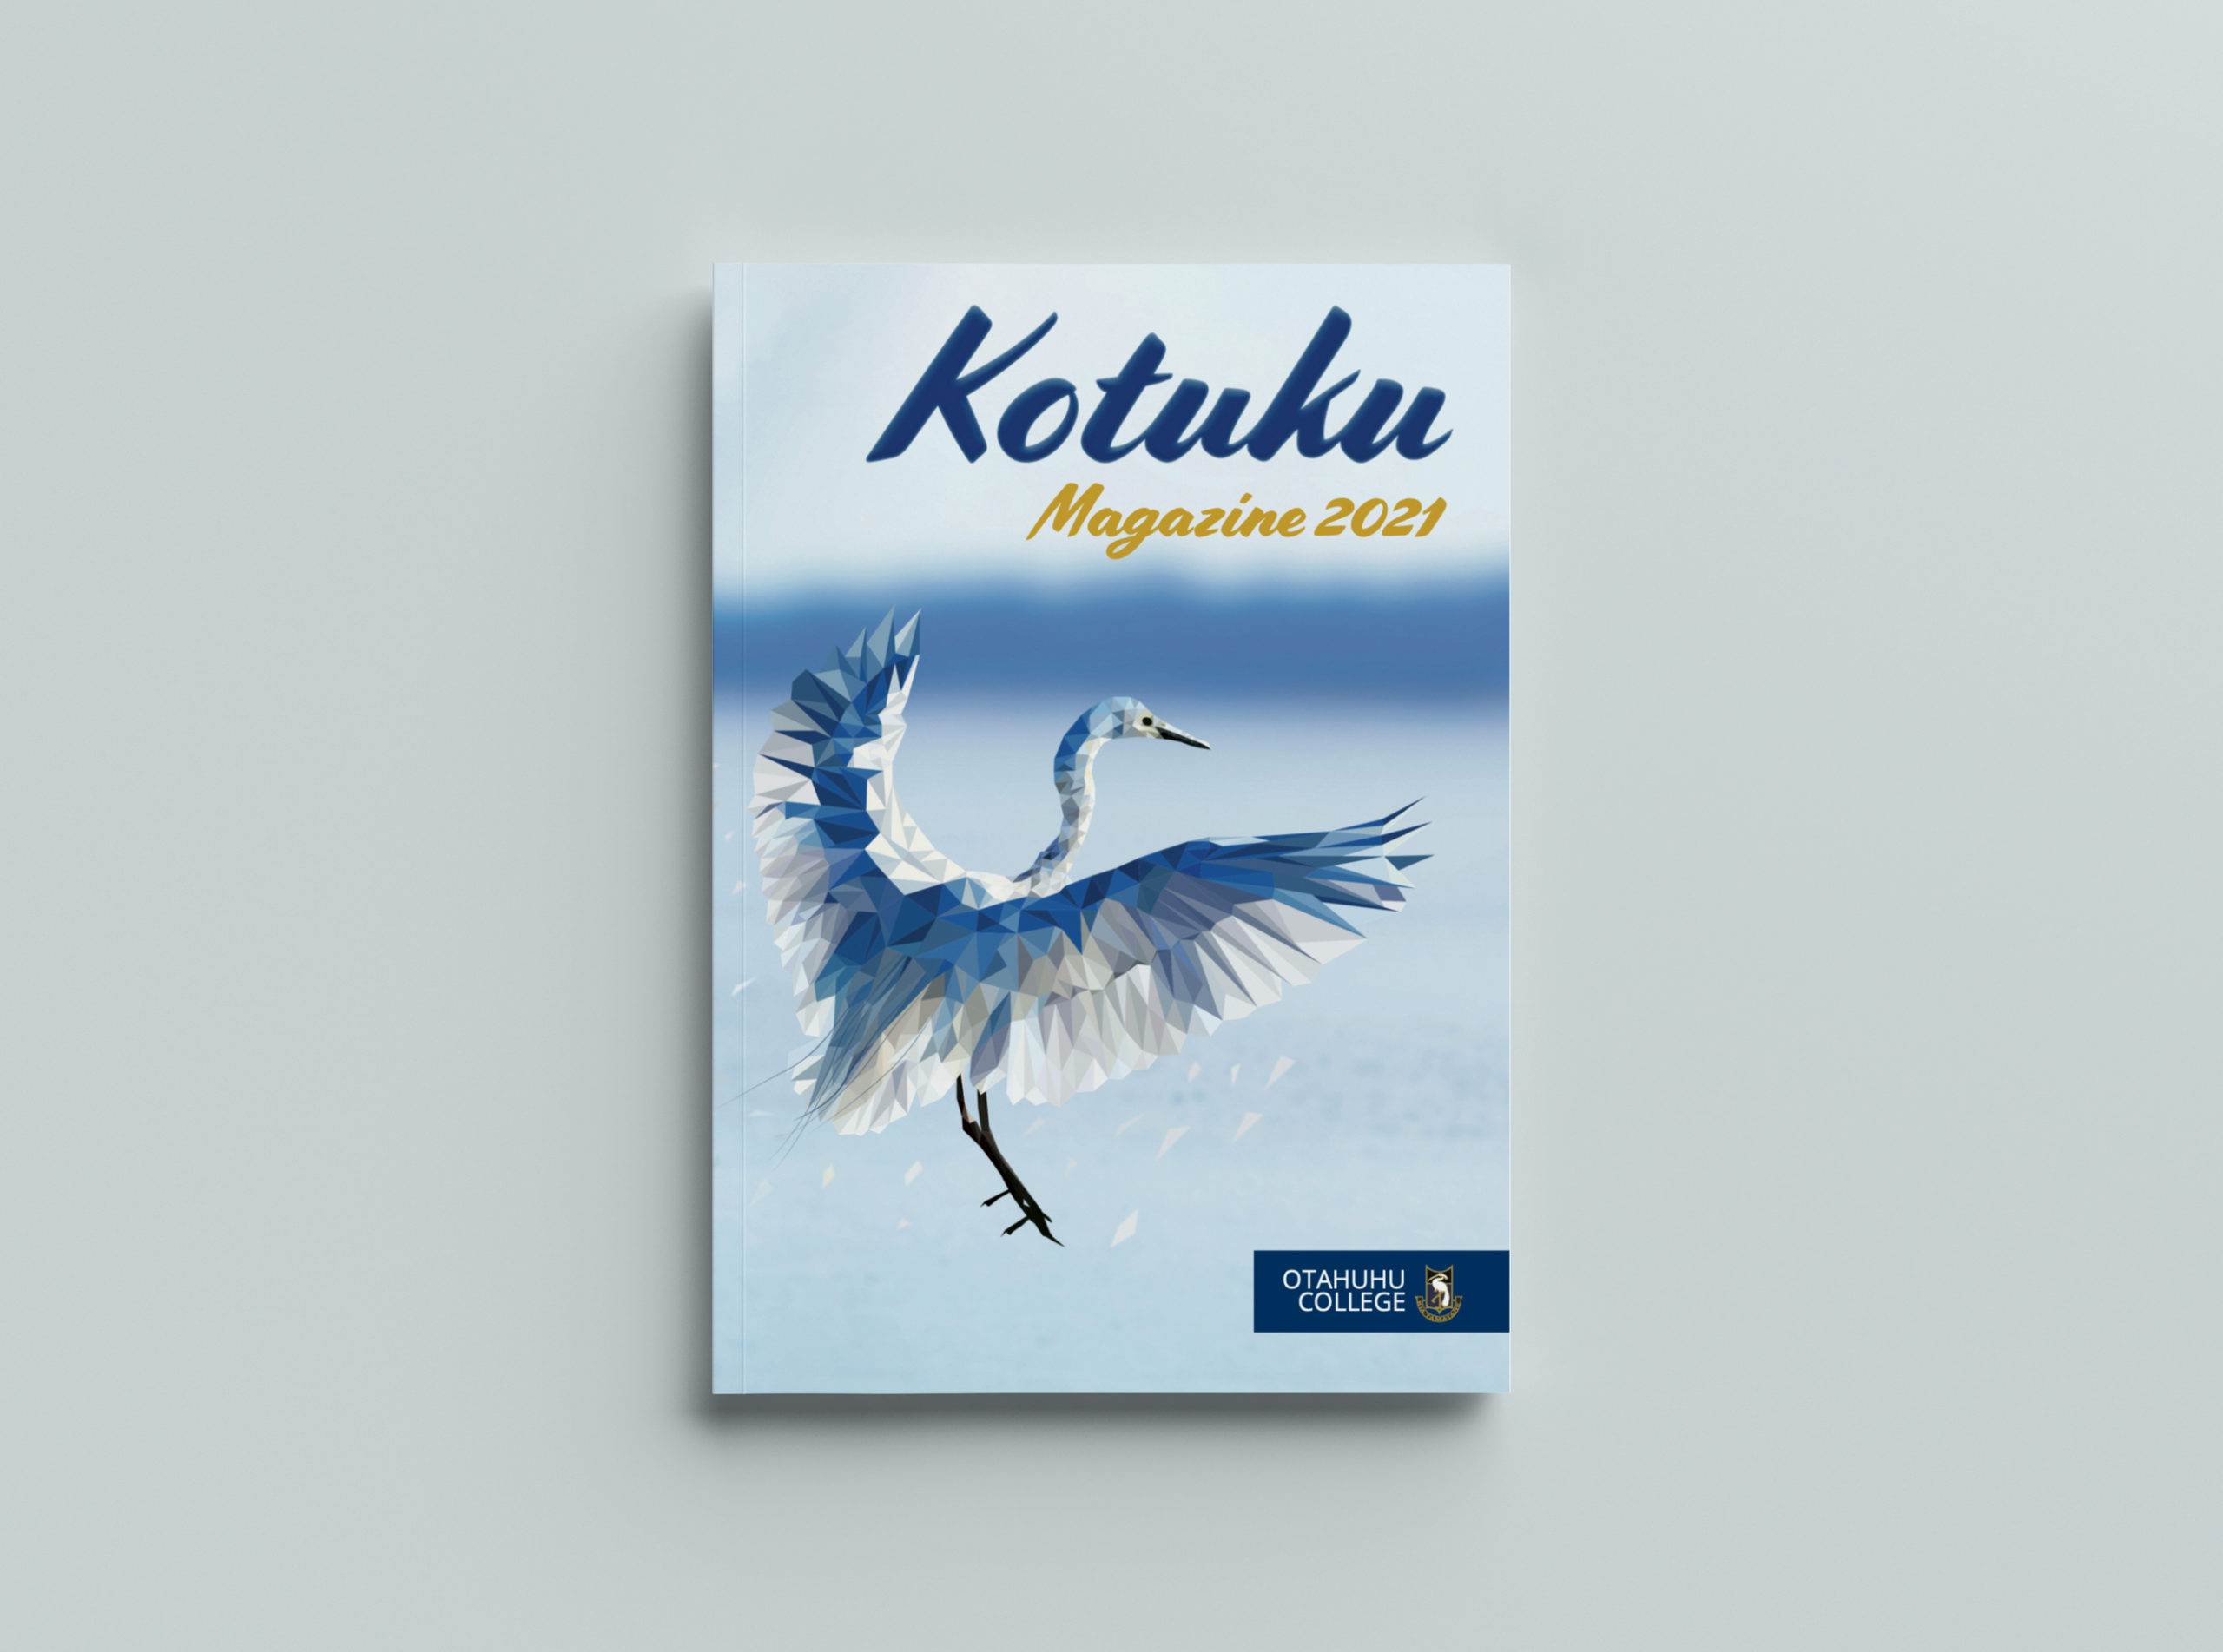 Kotuku Magazine for Otahuhu School